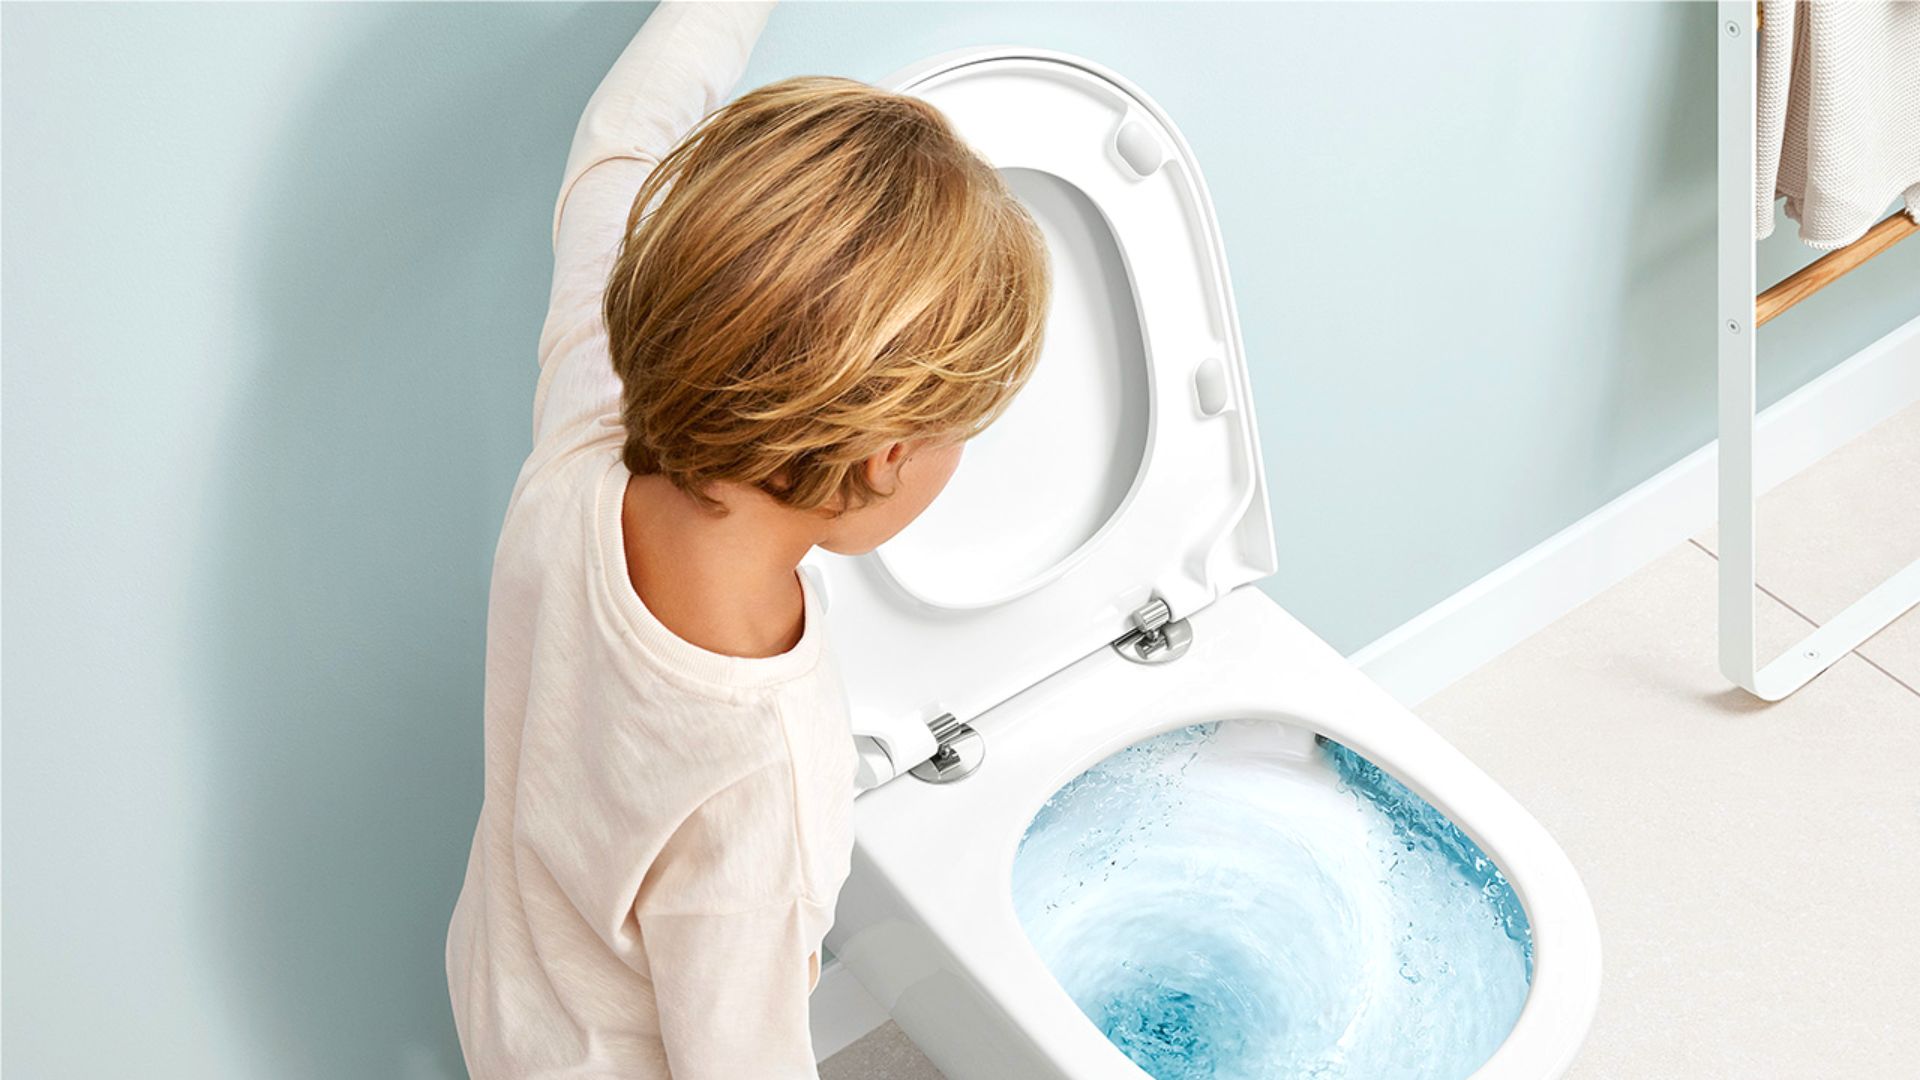 Child Flushing Toilet In Bathroom